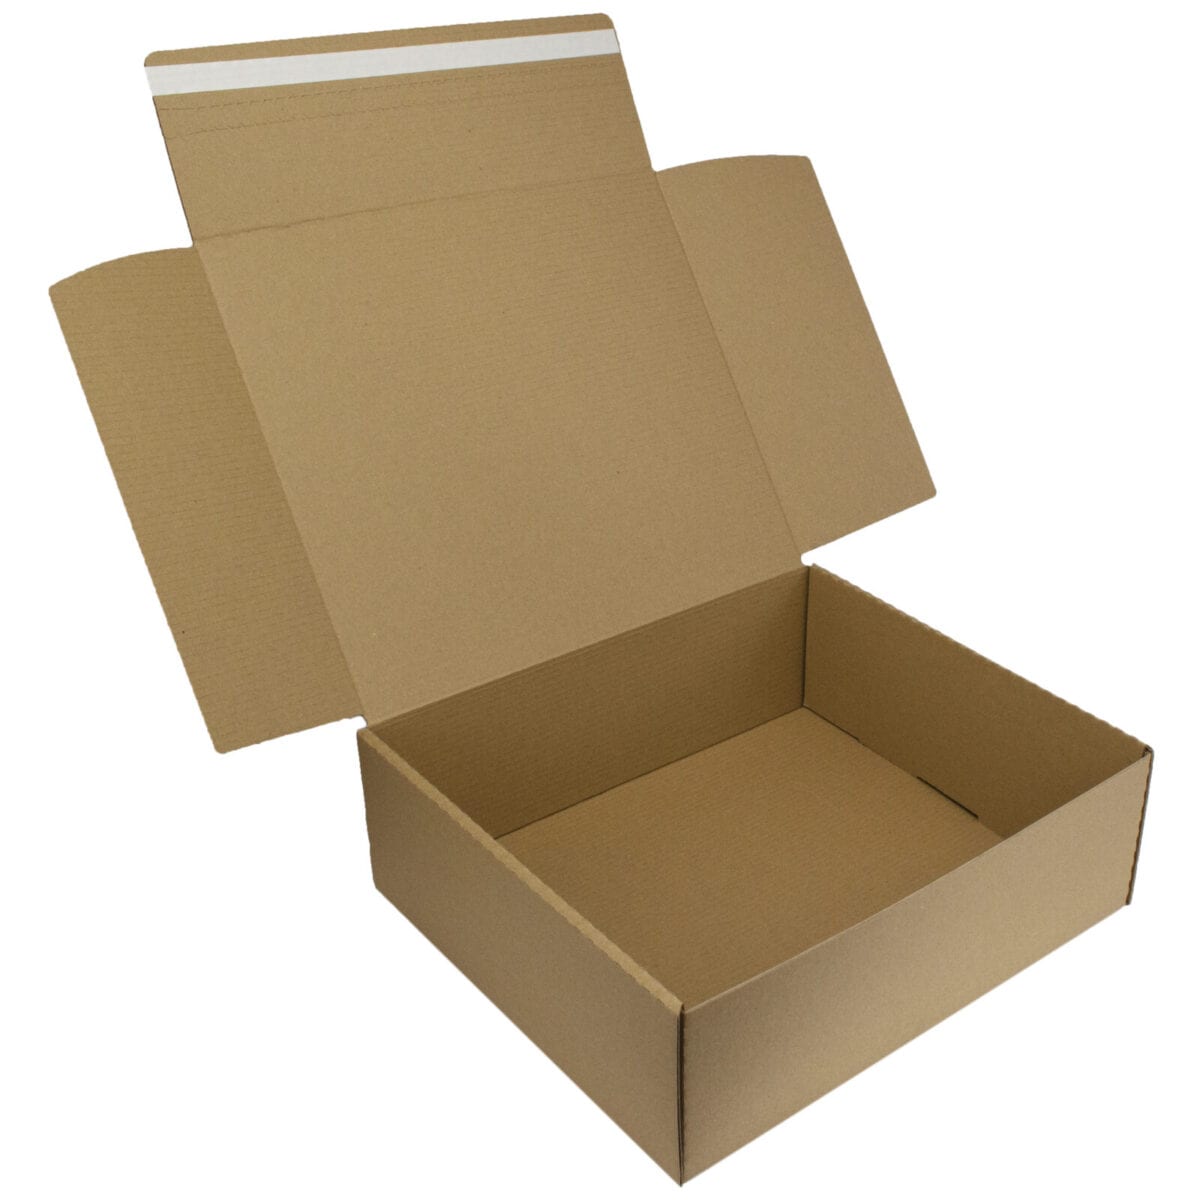 360x320x120mm Self-Seal Brown Postal Boxes | Packaging Supplies